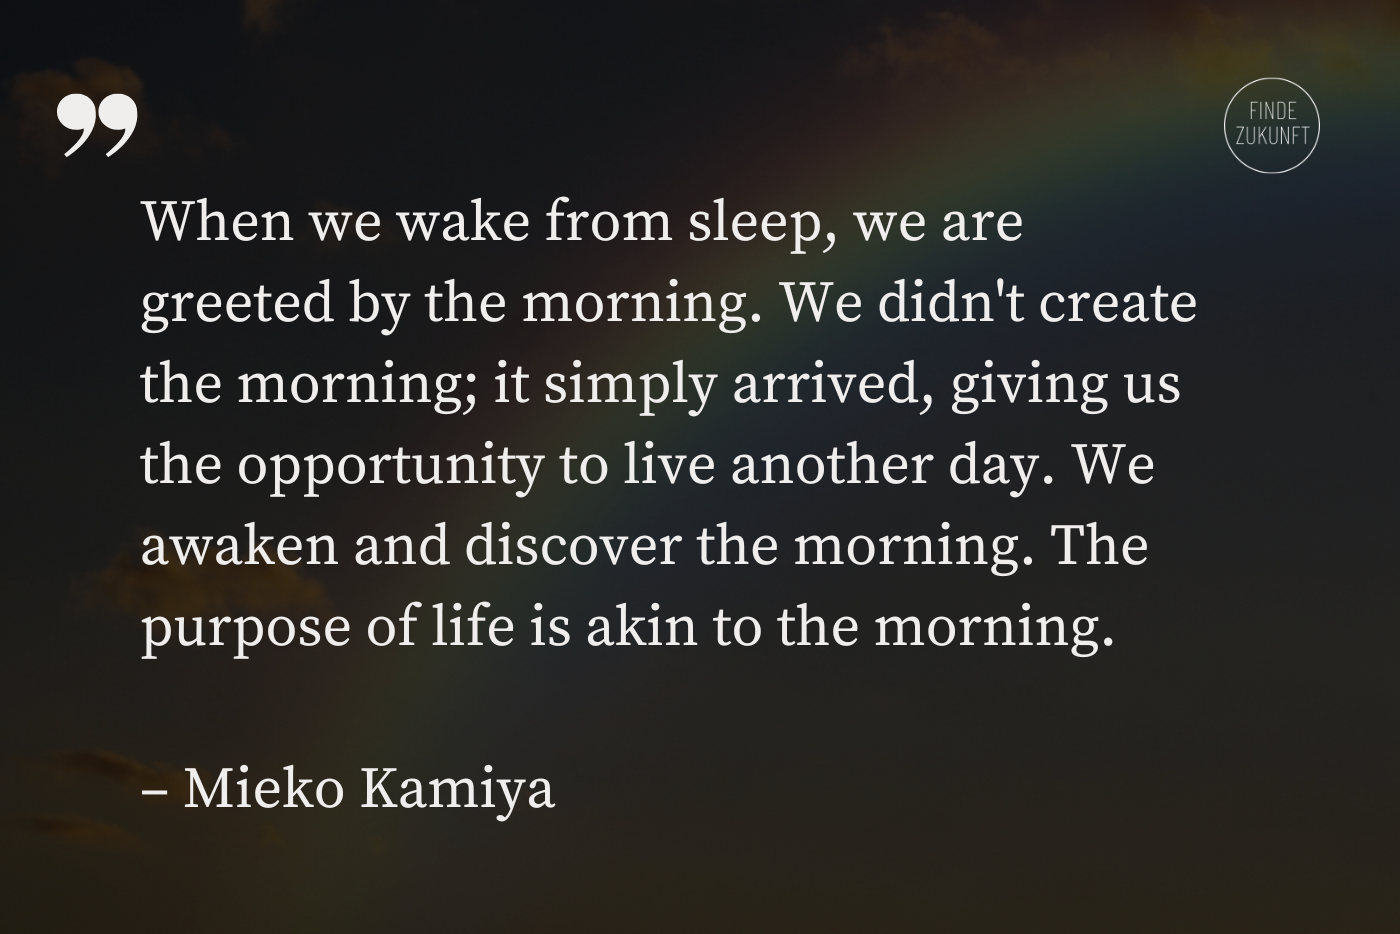 Mieko Kamiya Quote Meaning of Life